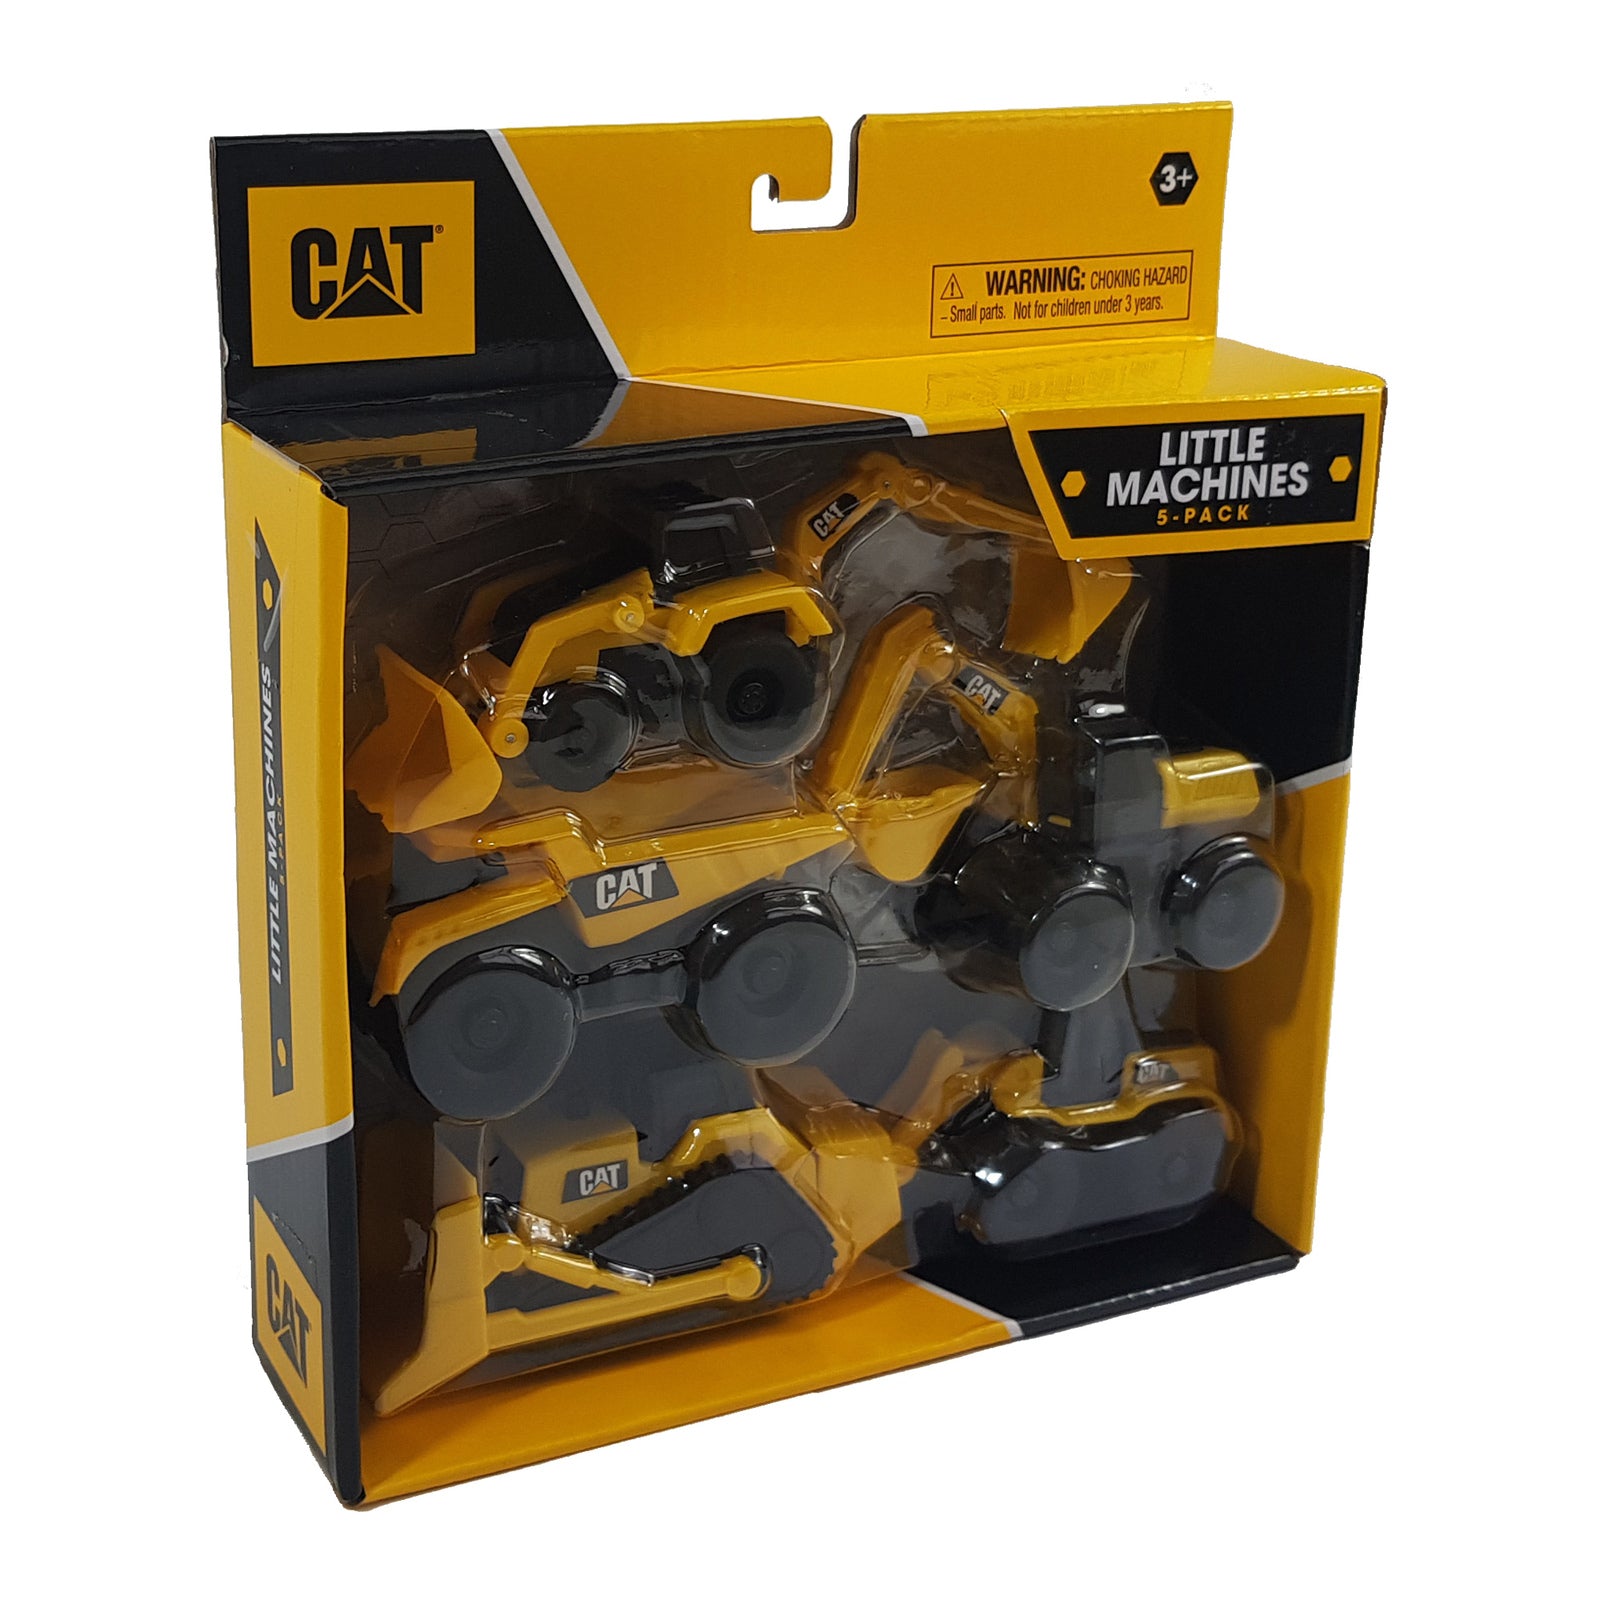 CAT - Little Machines 5 Pack